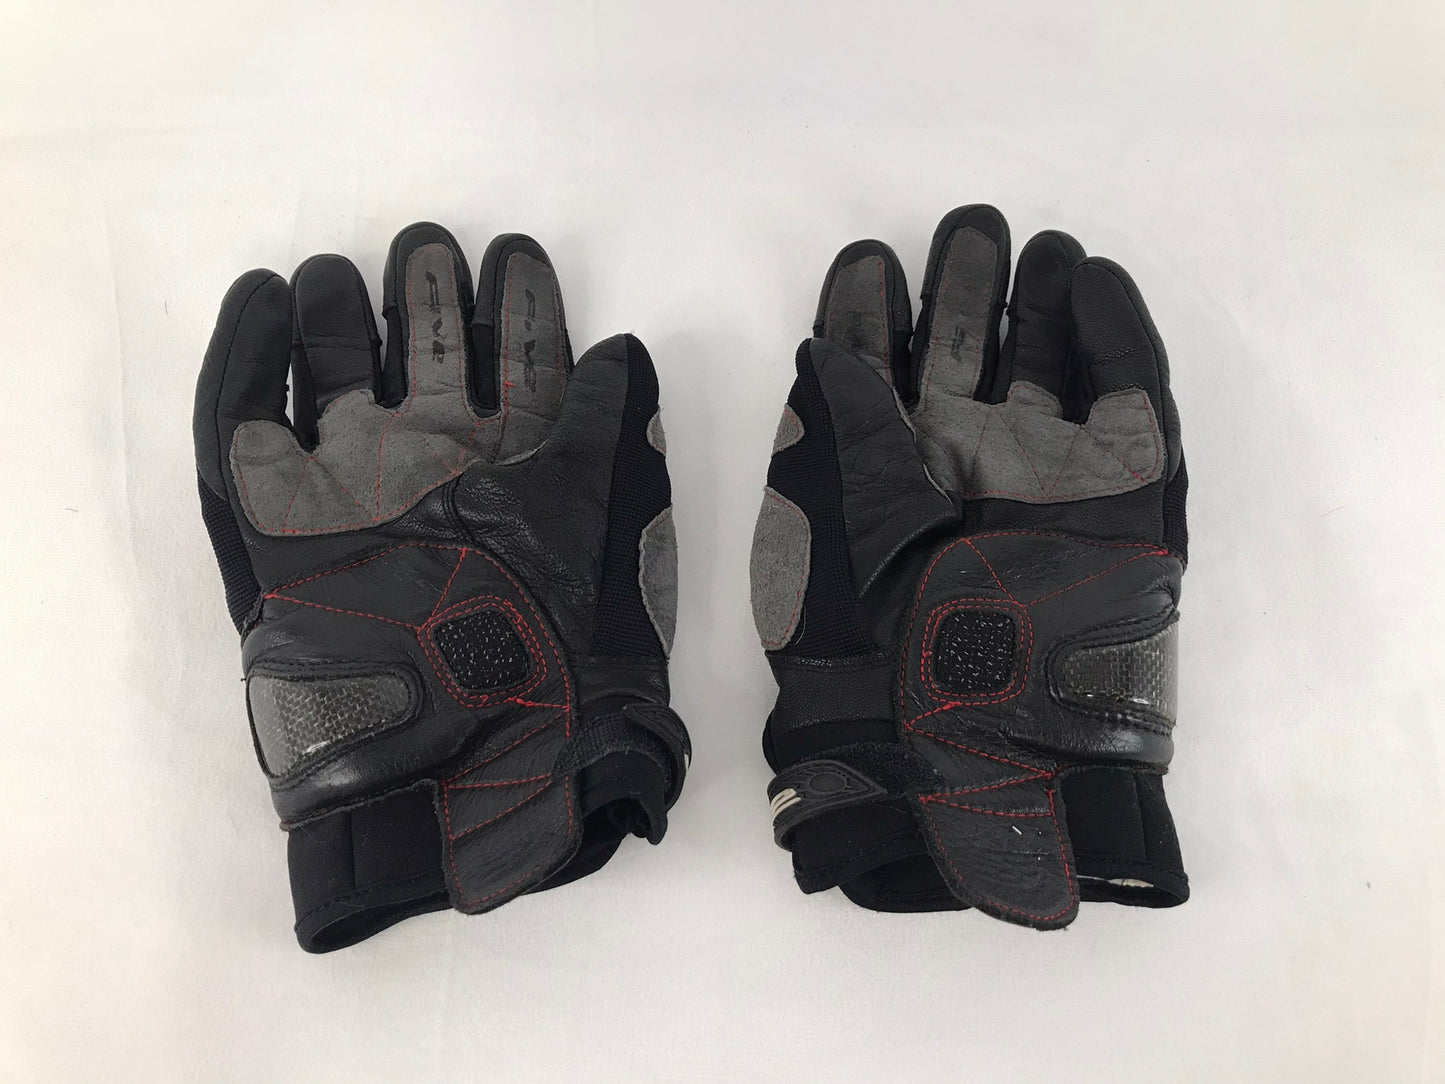 Motocross BMX Dirt Bike Bike Men's Size X Large Five Stunt Evo Gloves Leather Cloth Excellent Quality